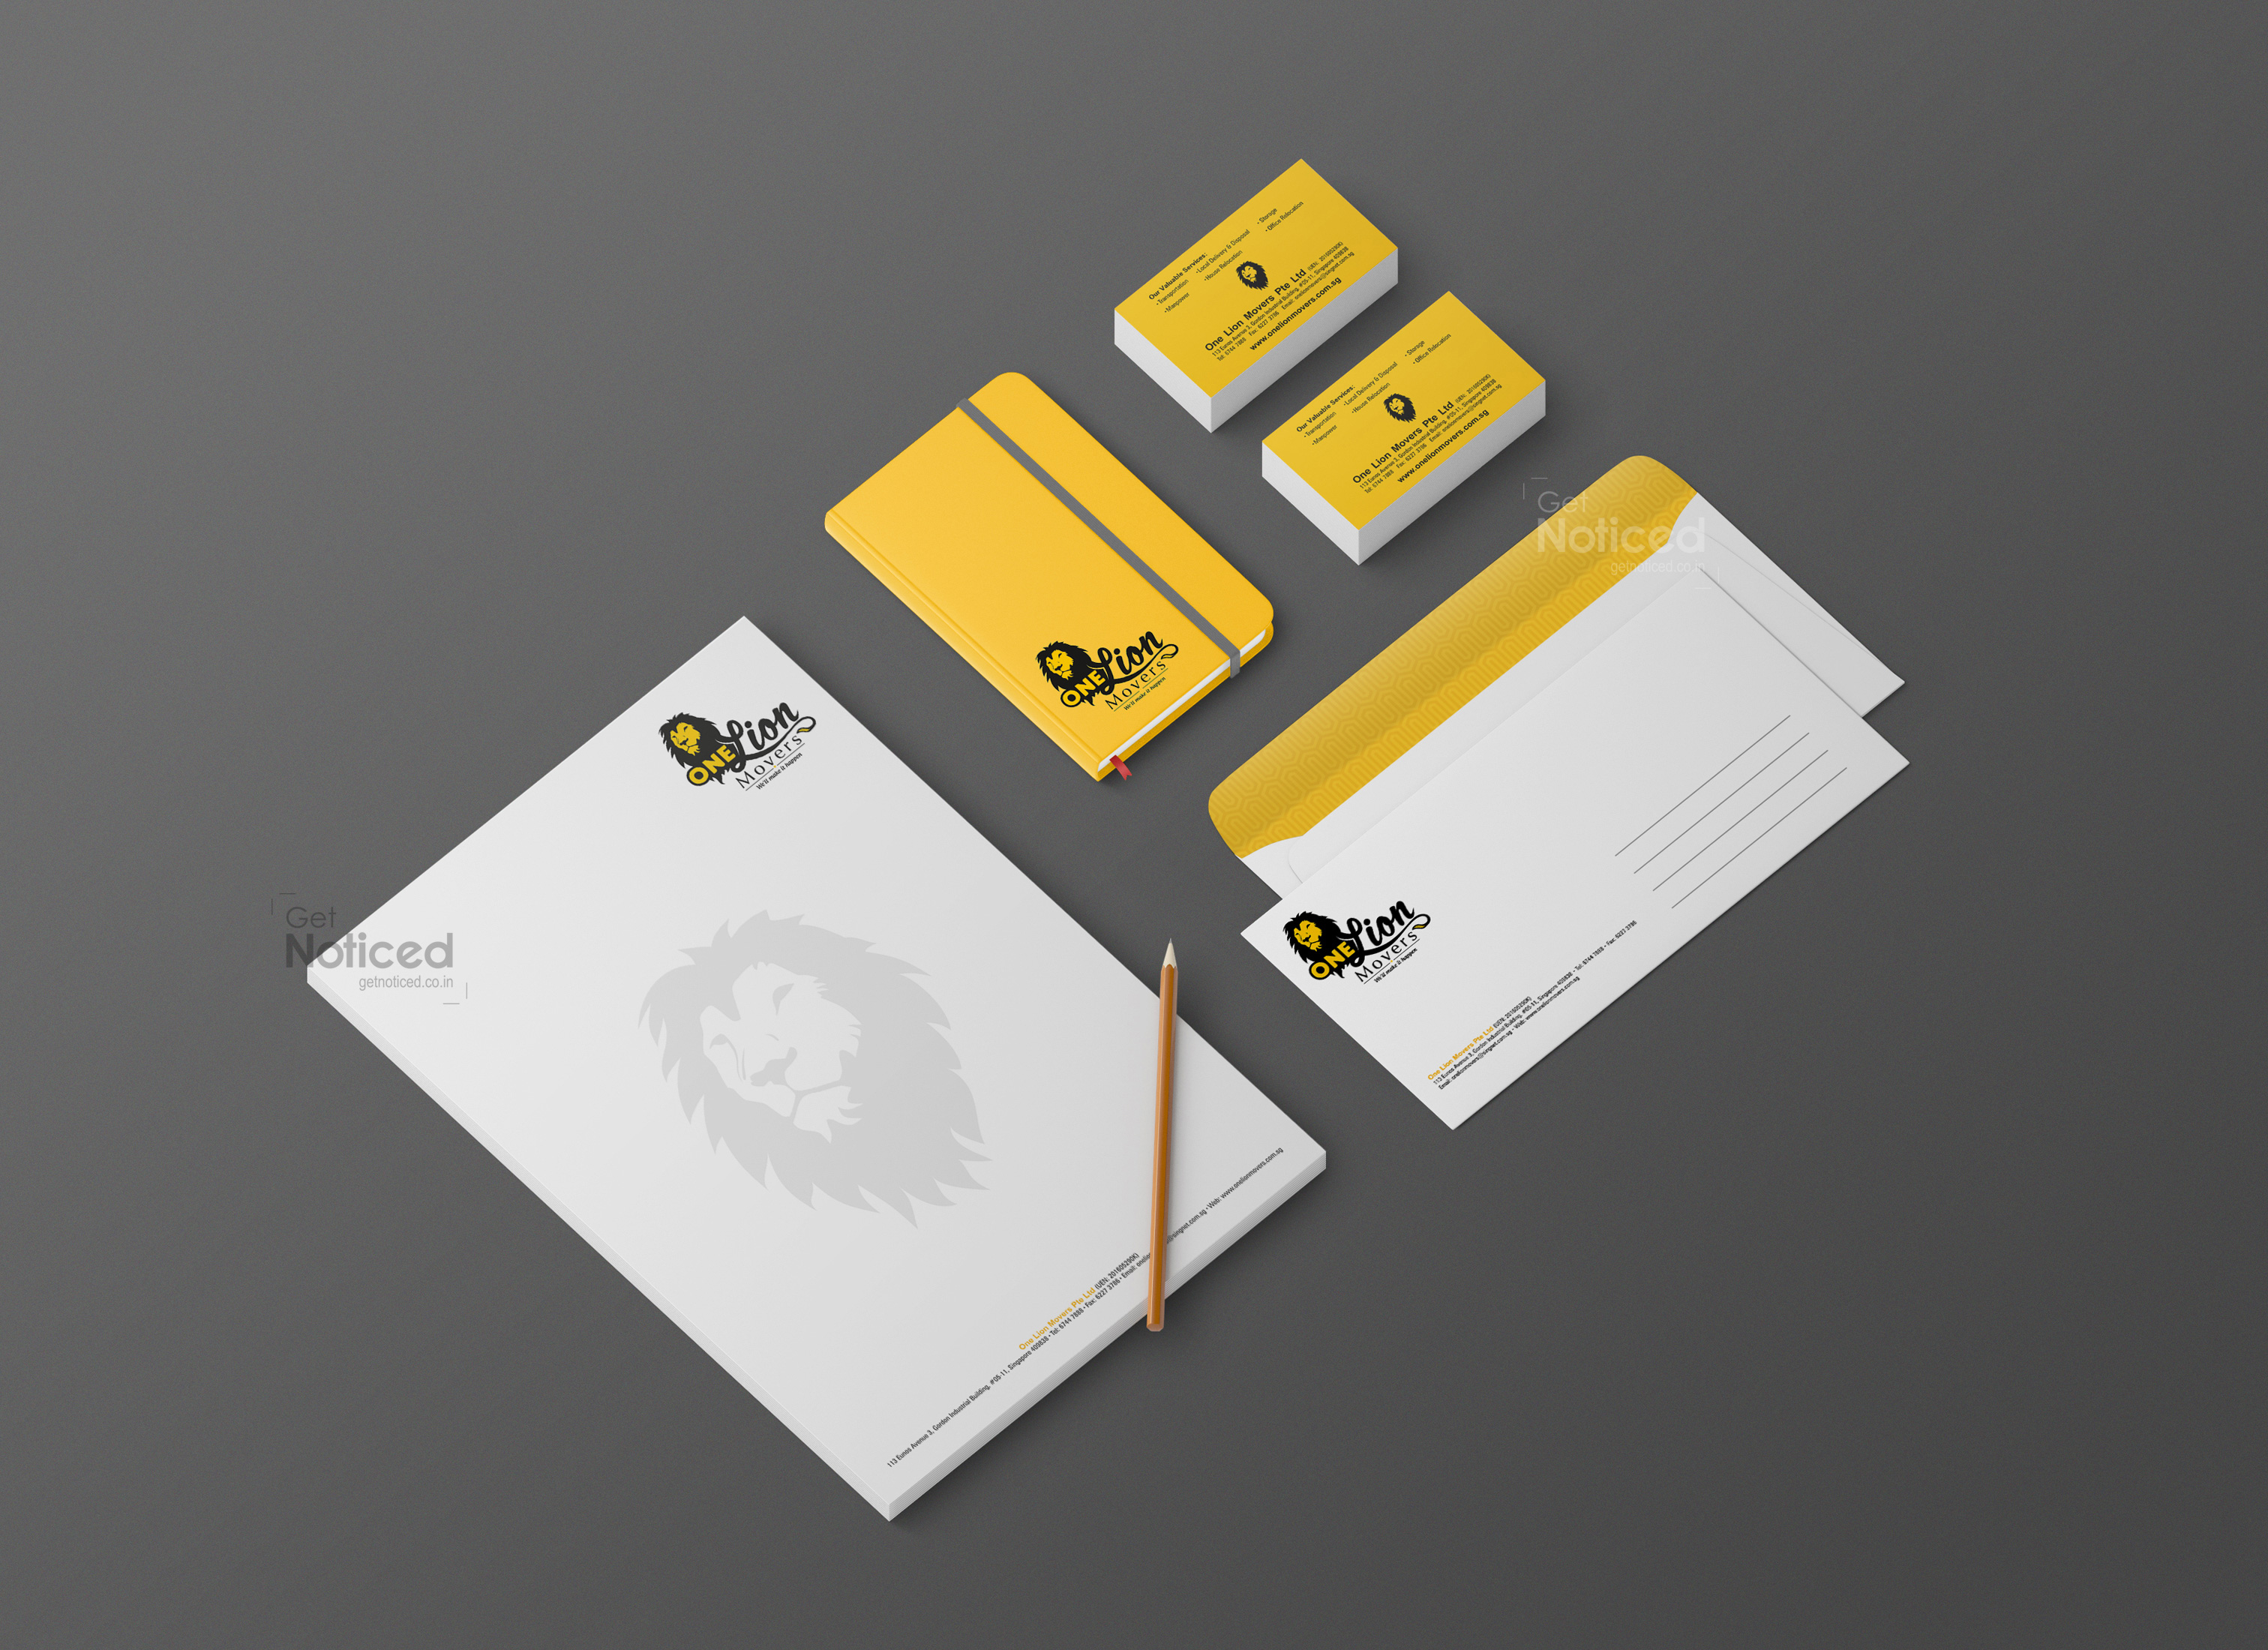 One Lion Corporate Identity Design